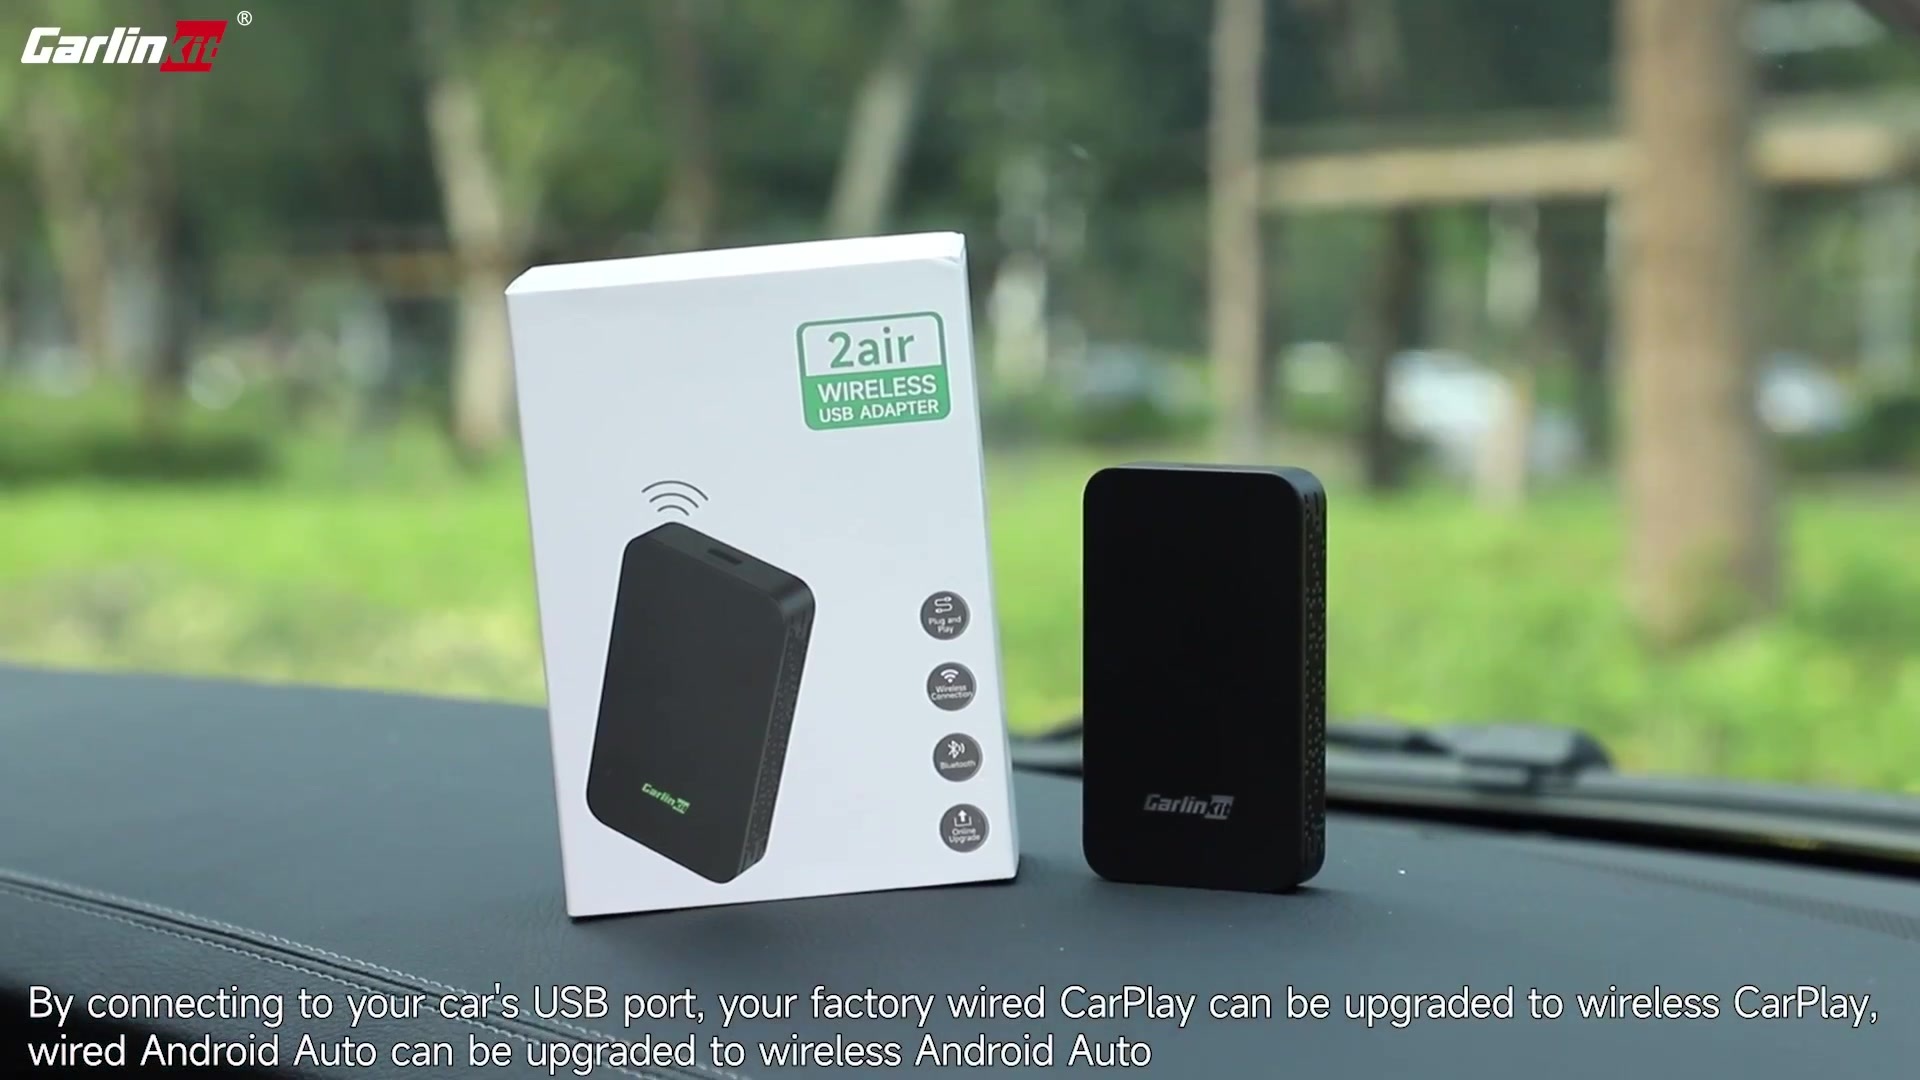 Universal Wireless CarPlay Adapter Carlinkit 5.0 CPC200-2air - GsmServer